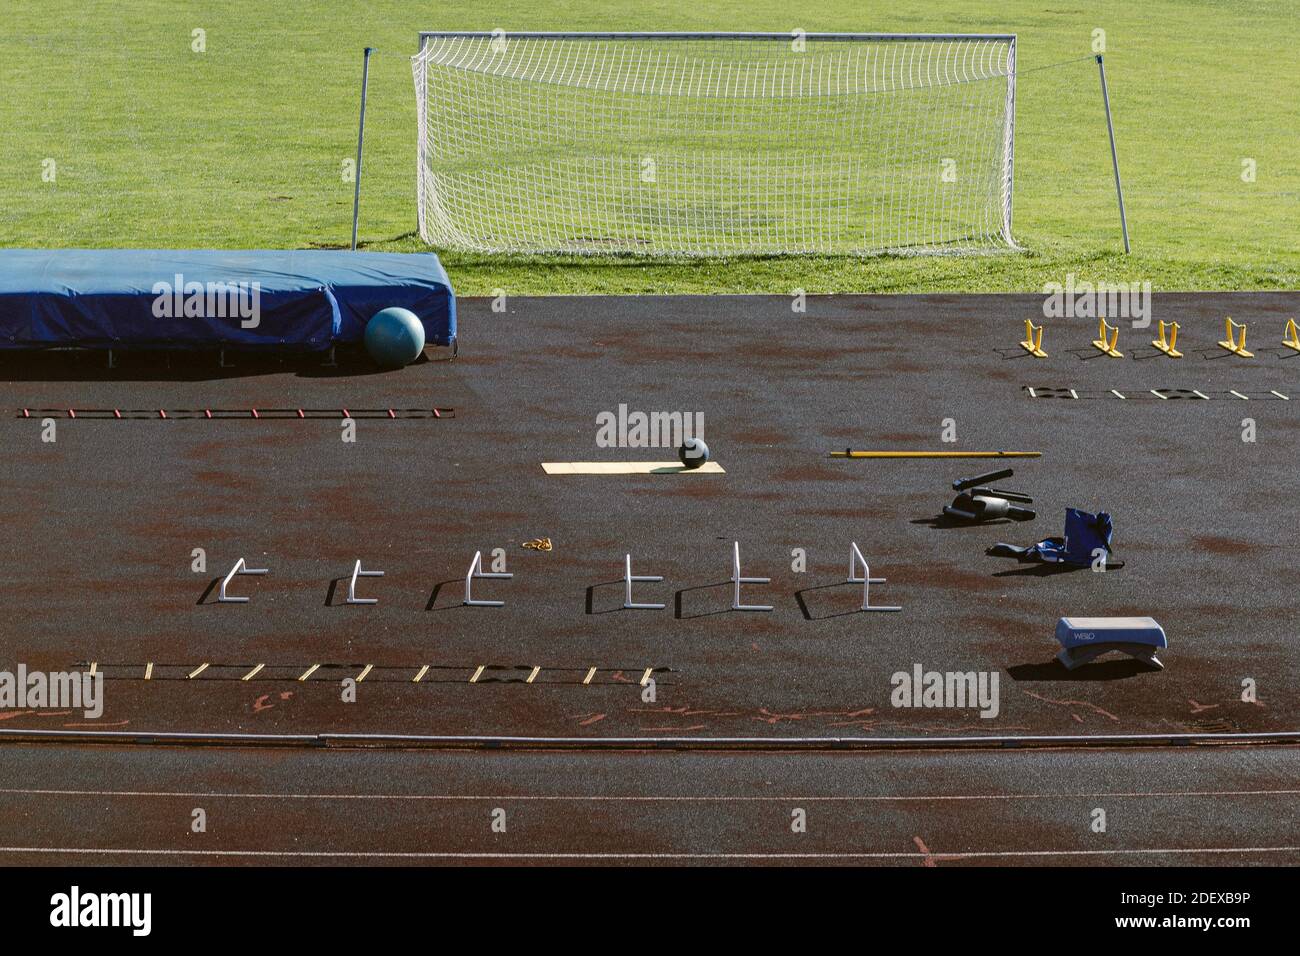 Athletics track with athletics gear Stock Photo